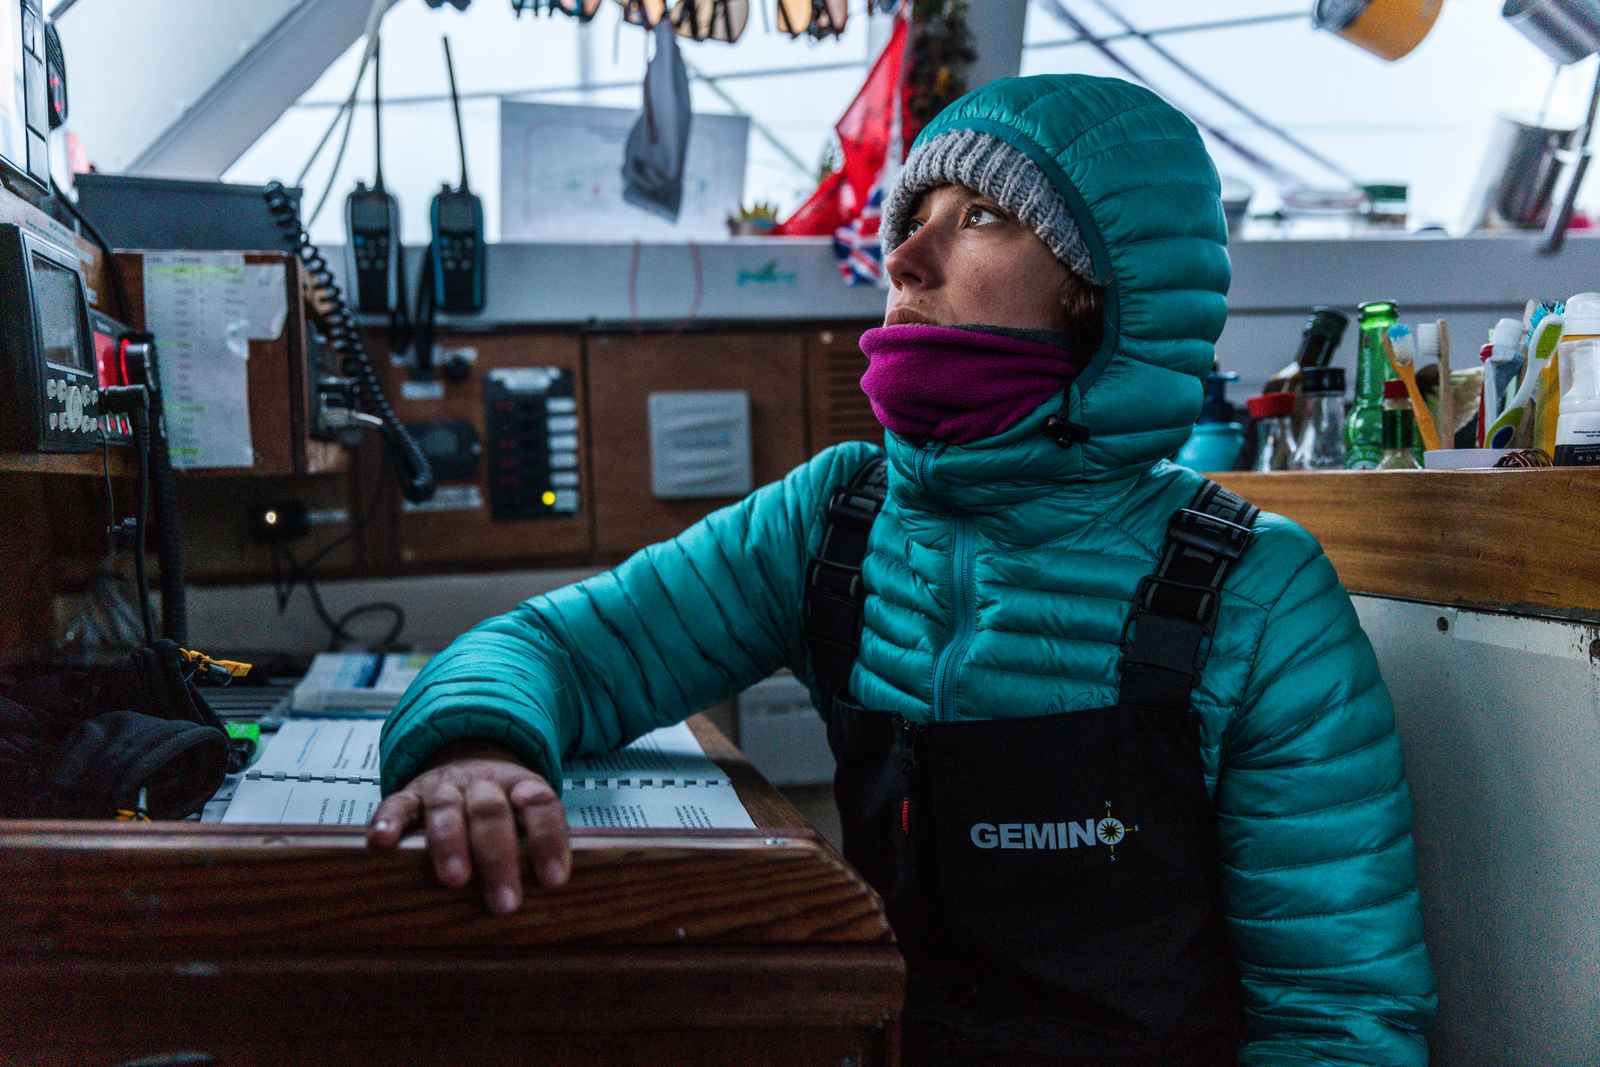 Via Sedna – all female sailing & climbing expedition